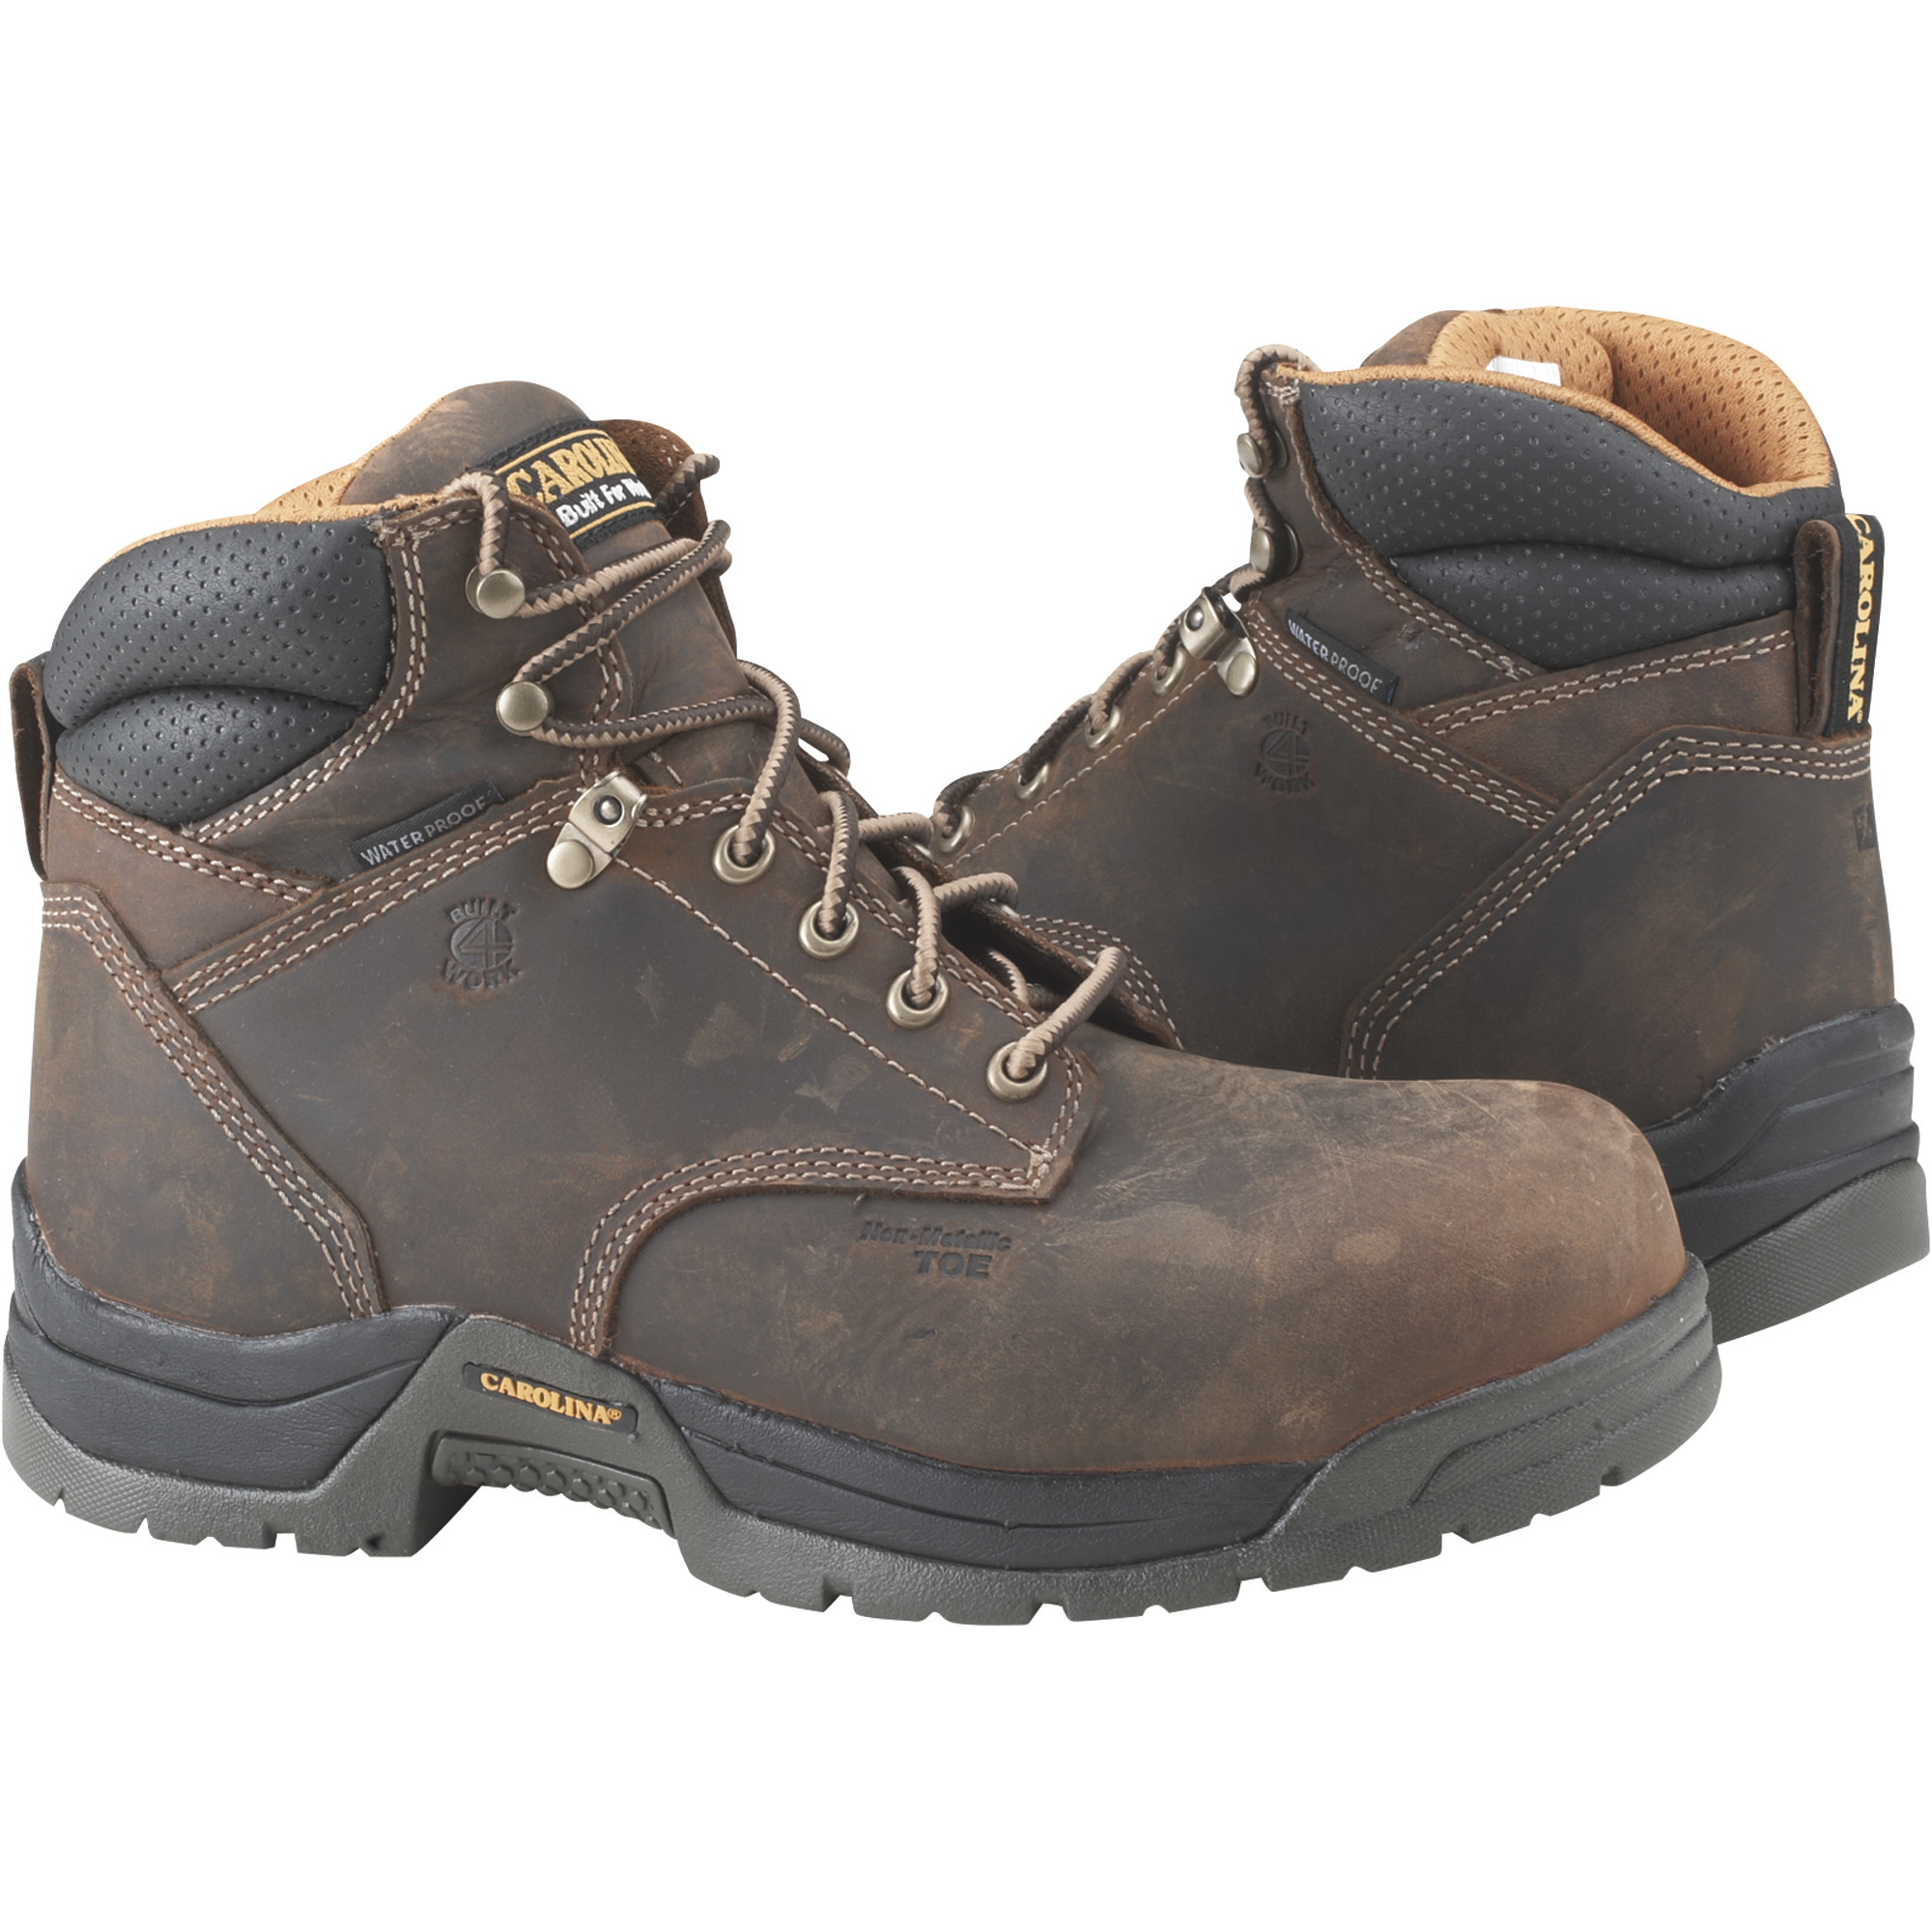 Carolina Men's 6Inch Waterproof Safety Toe Work Boots — Brown, Size 7 1/2 Wide, Model CA5520 -  Carolina Shoe, 726363512775